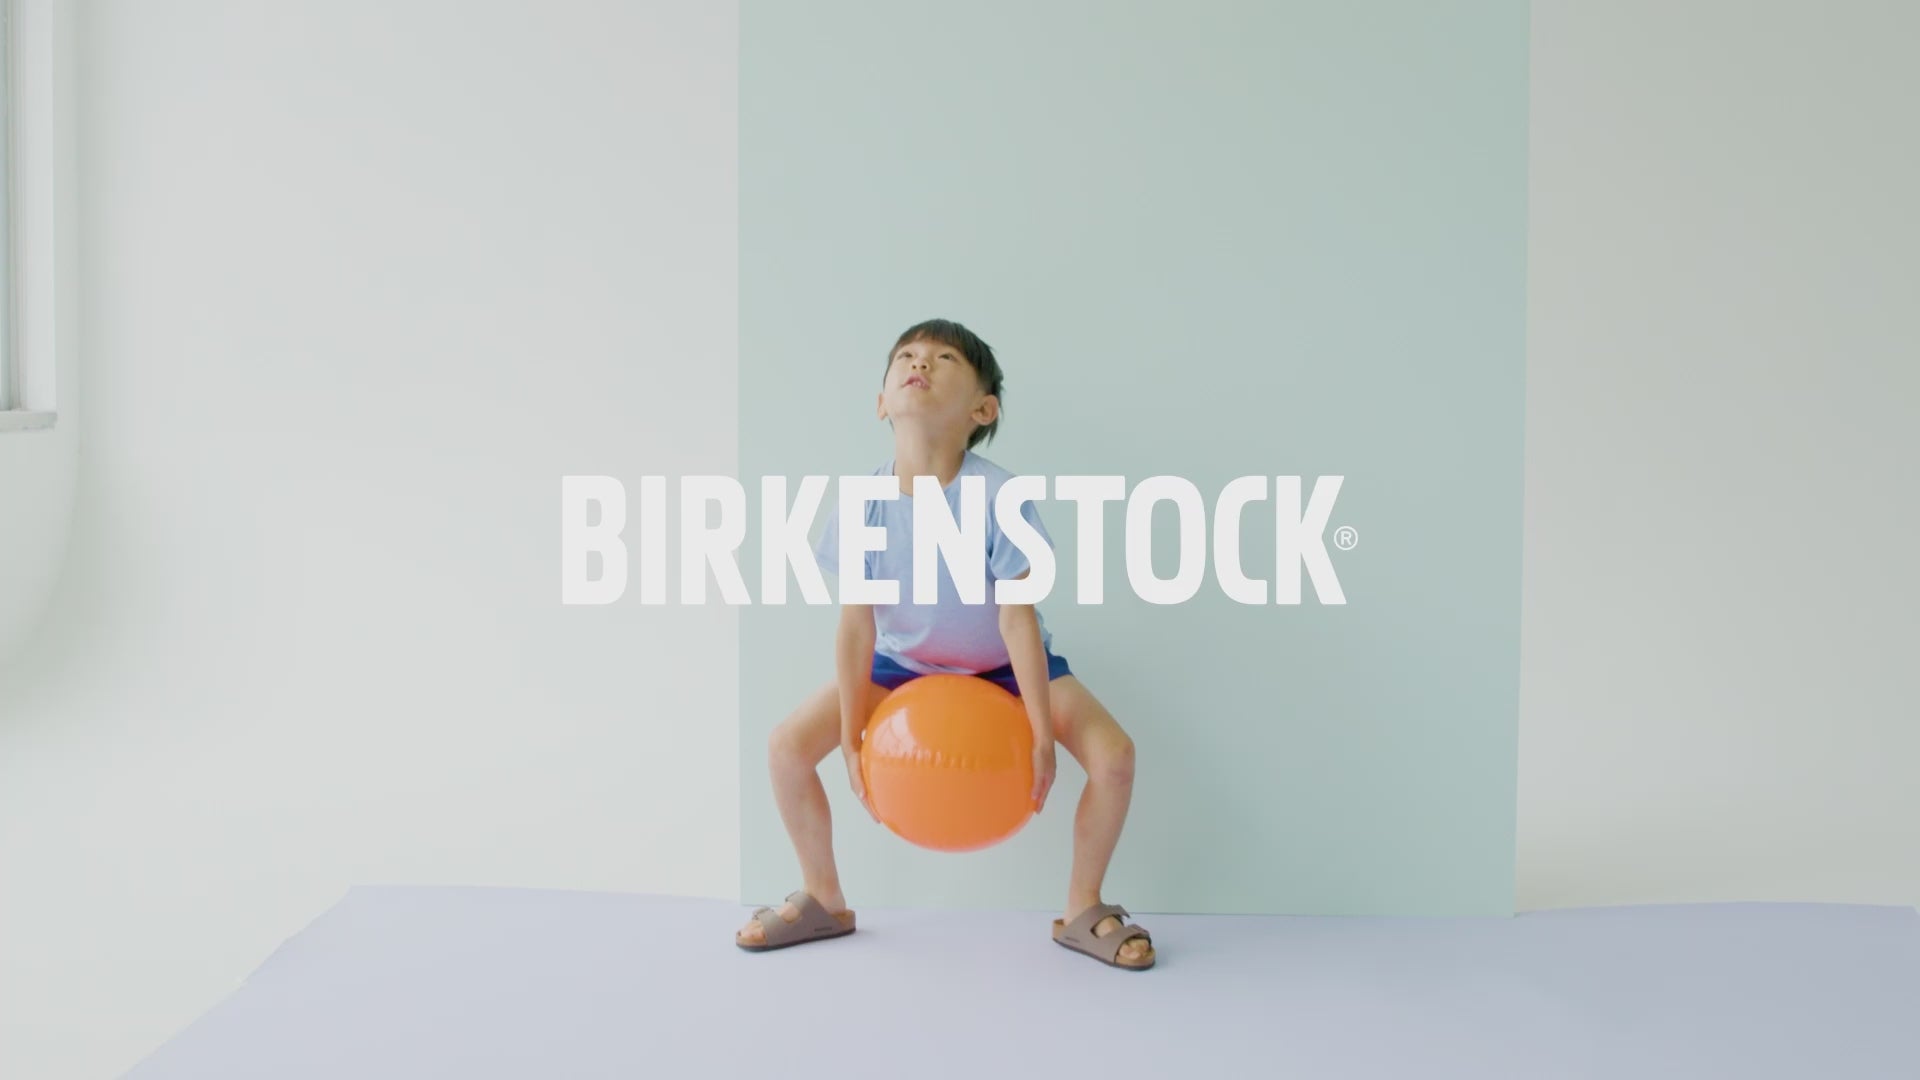 Load video: Birkenstock promotion video